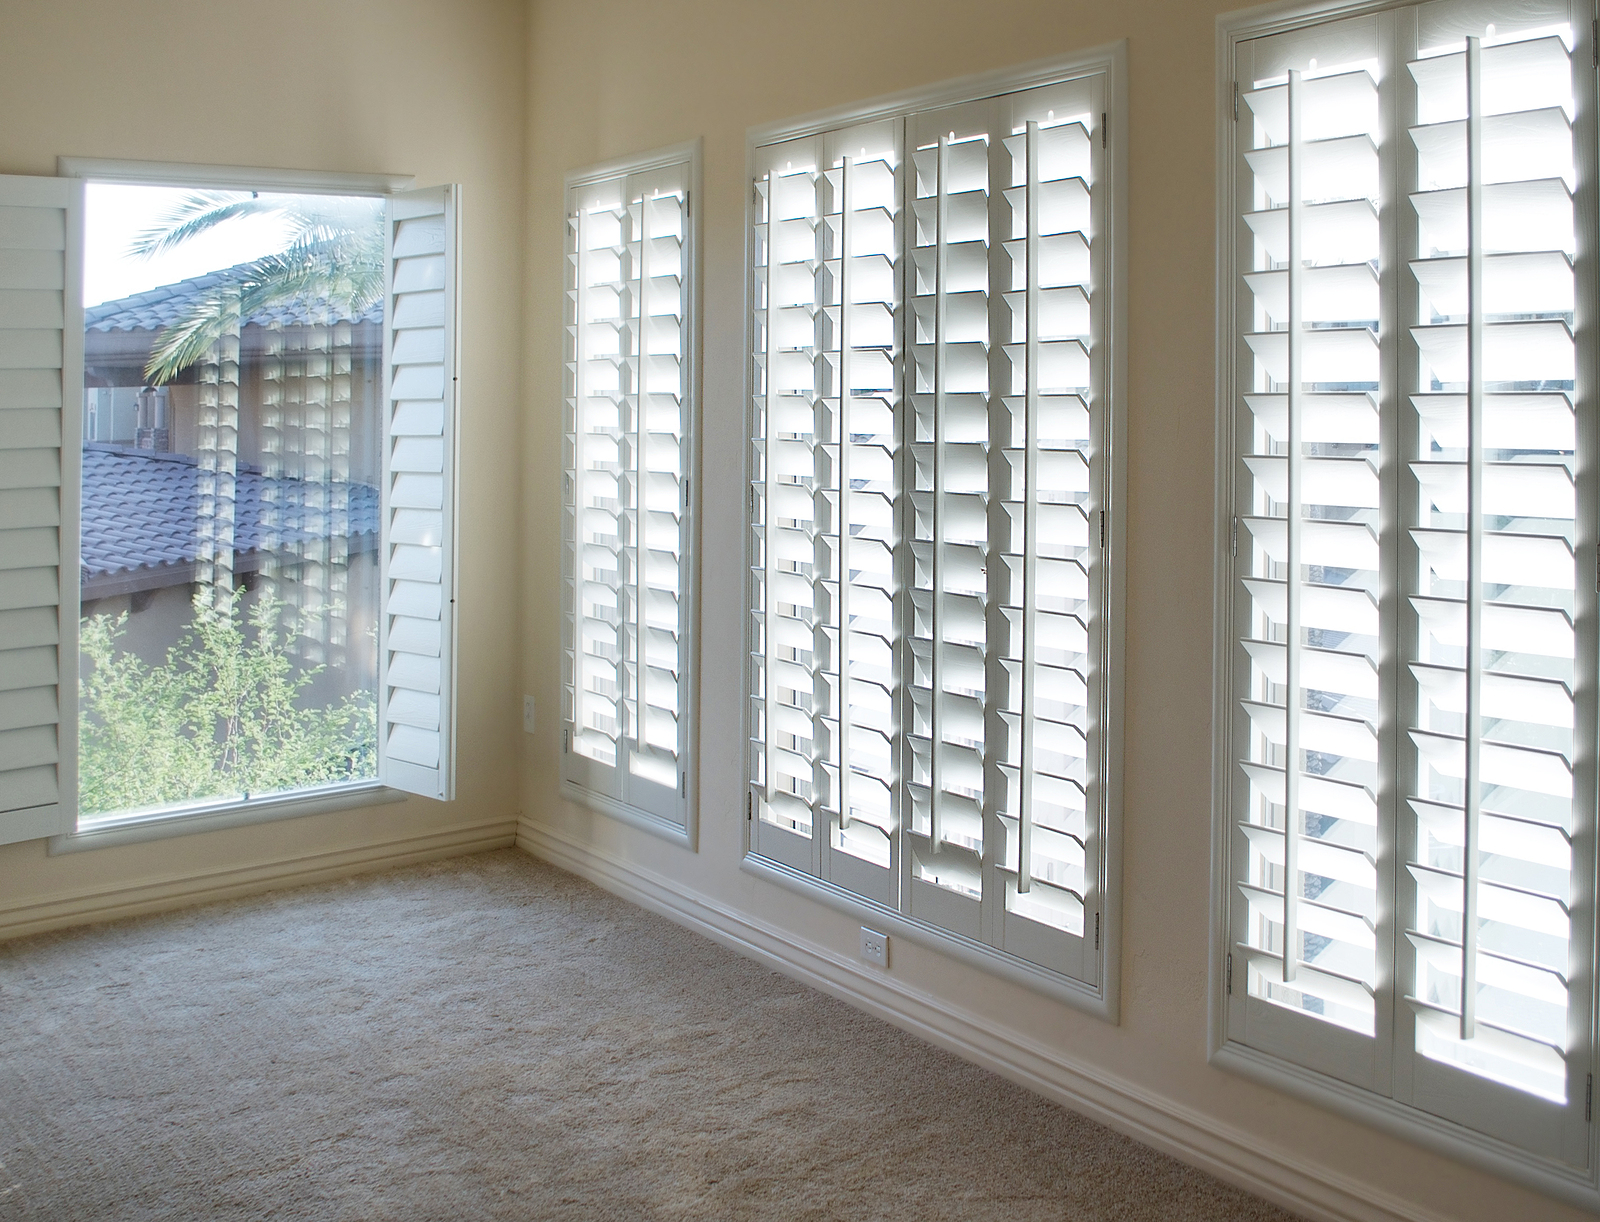 Full height window shutters - White plantation style wood Shutters